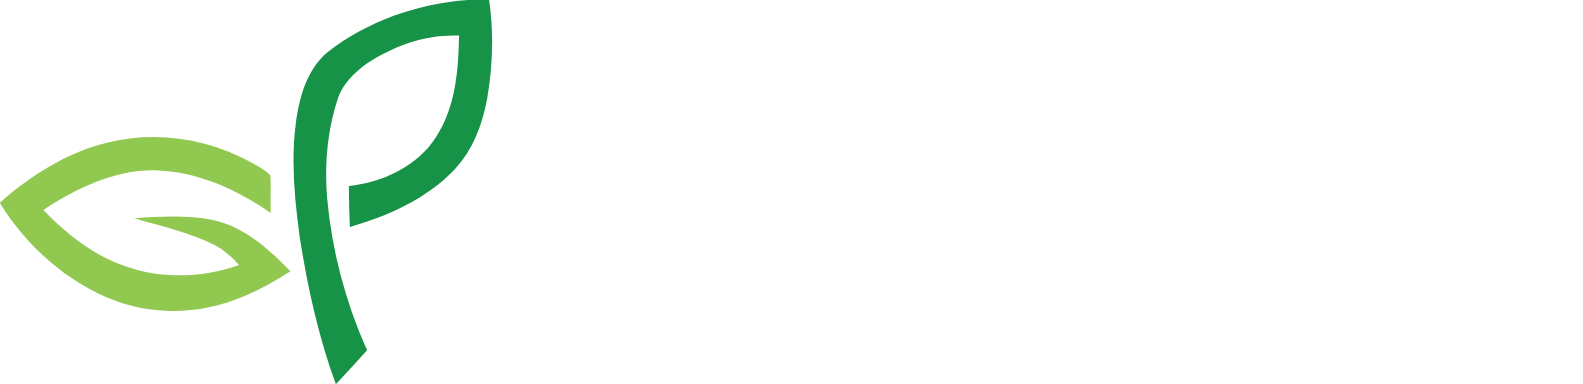 GreenPower Motor Company Logo groß für dunkle Hintergründe (transparentes PNG)